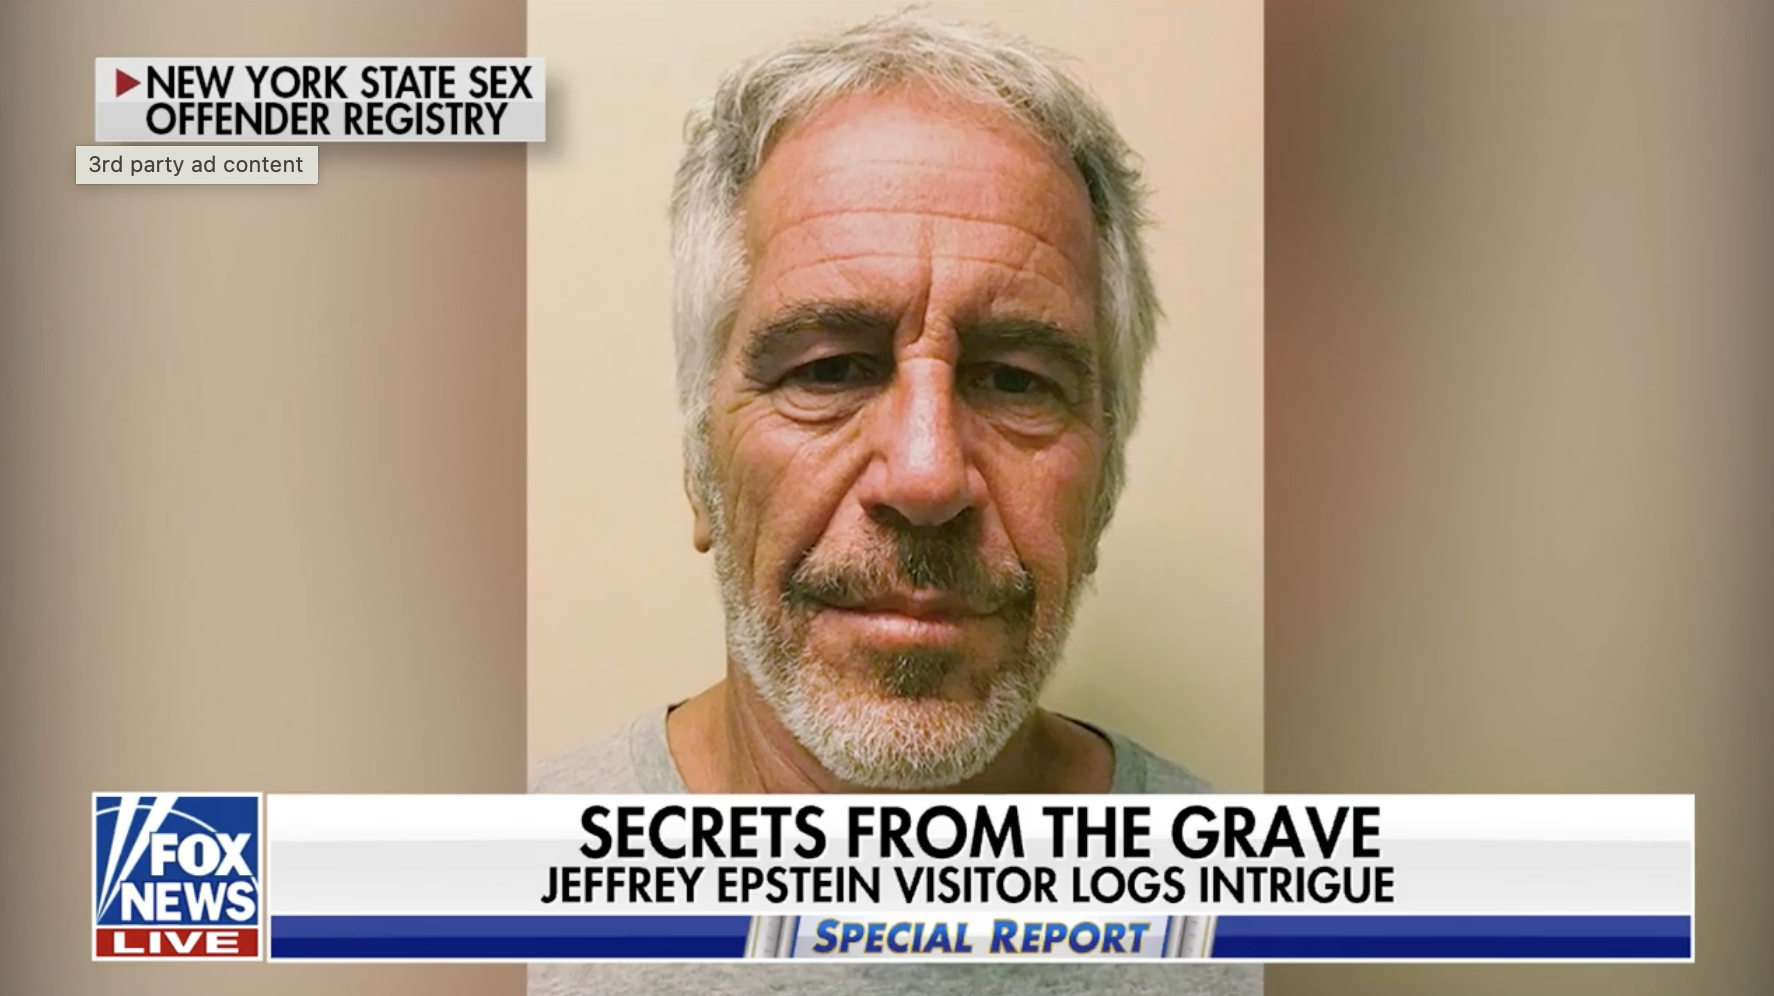 Epstein, avere de site de milioane de dolari și insule private